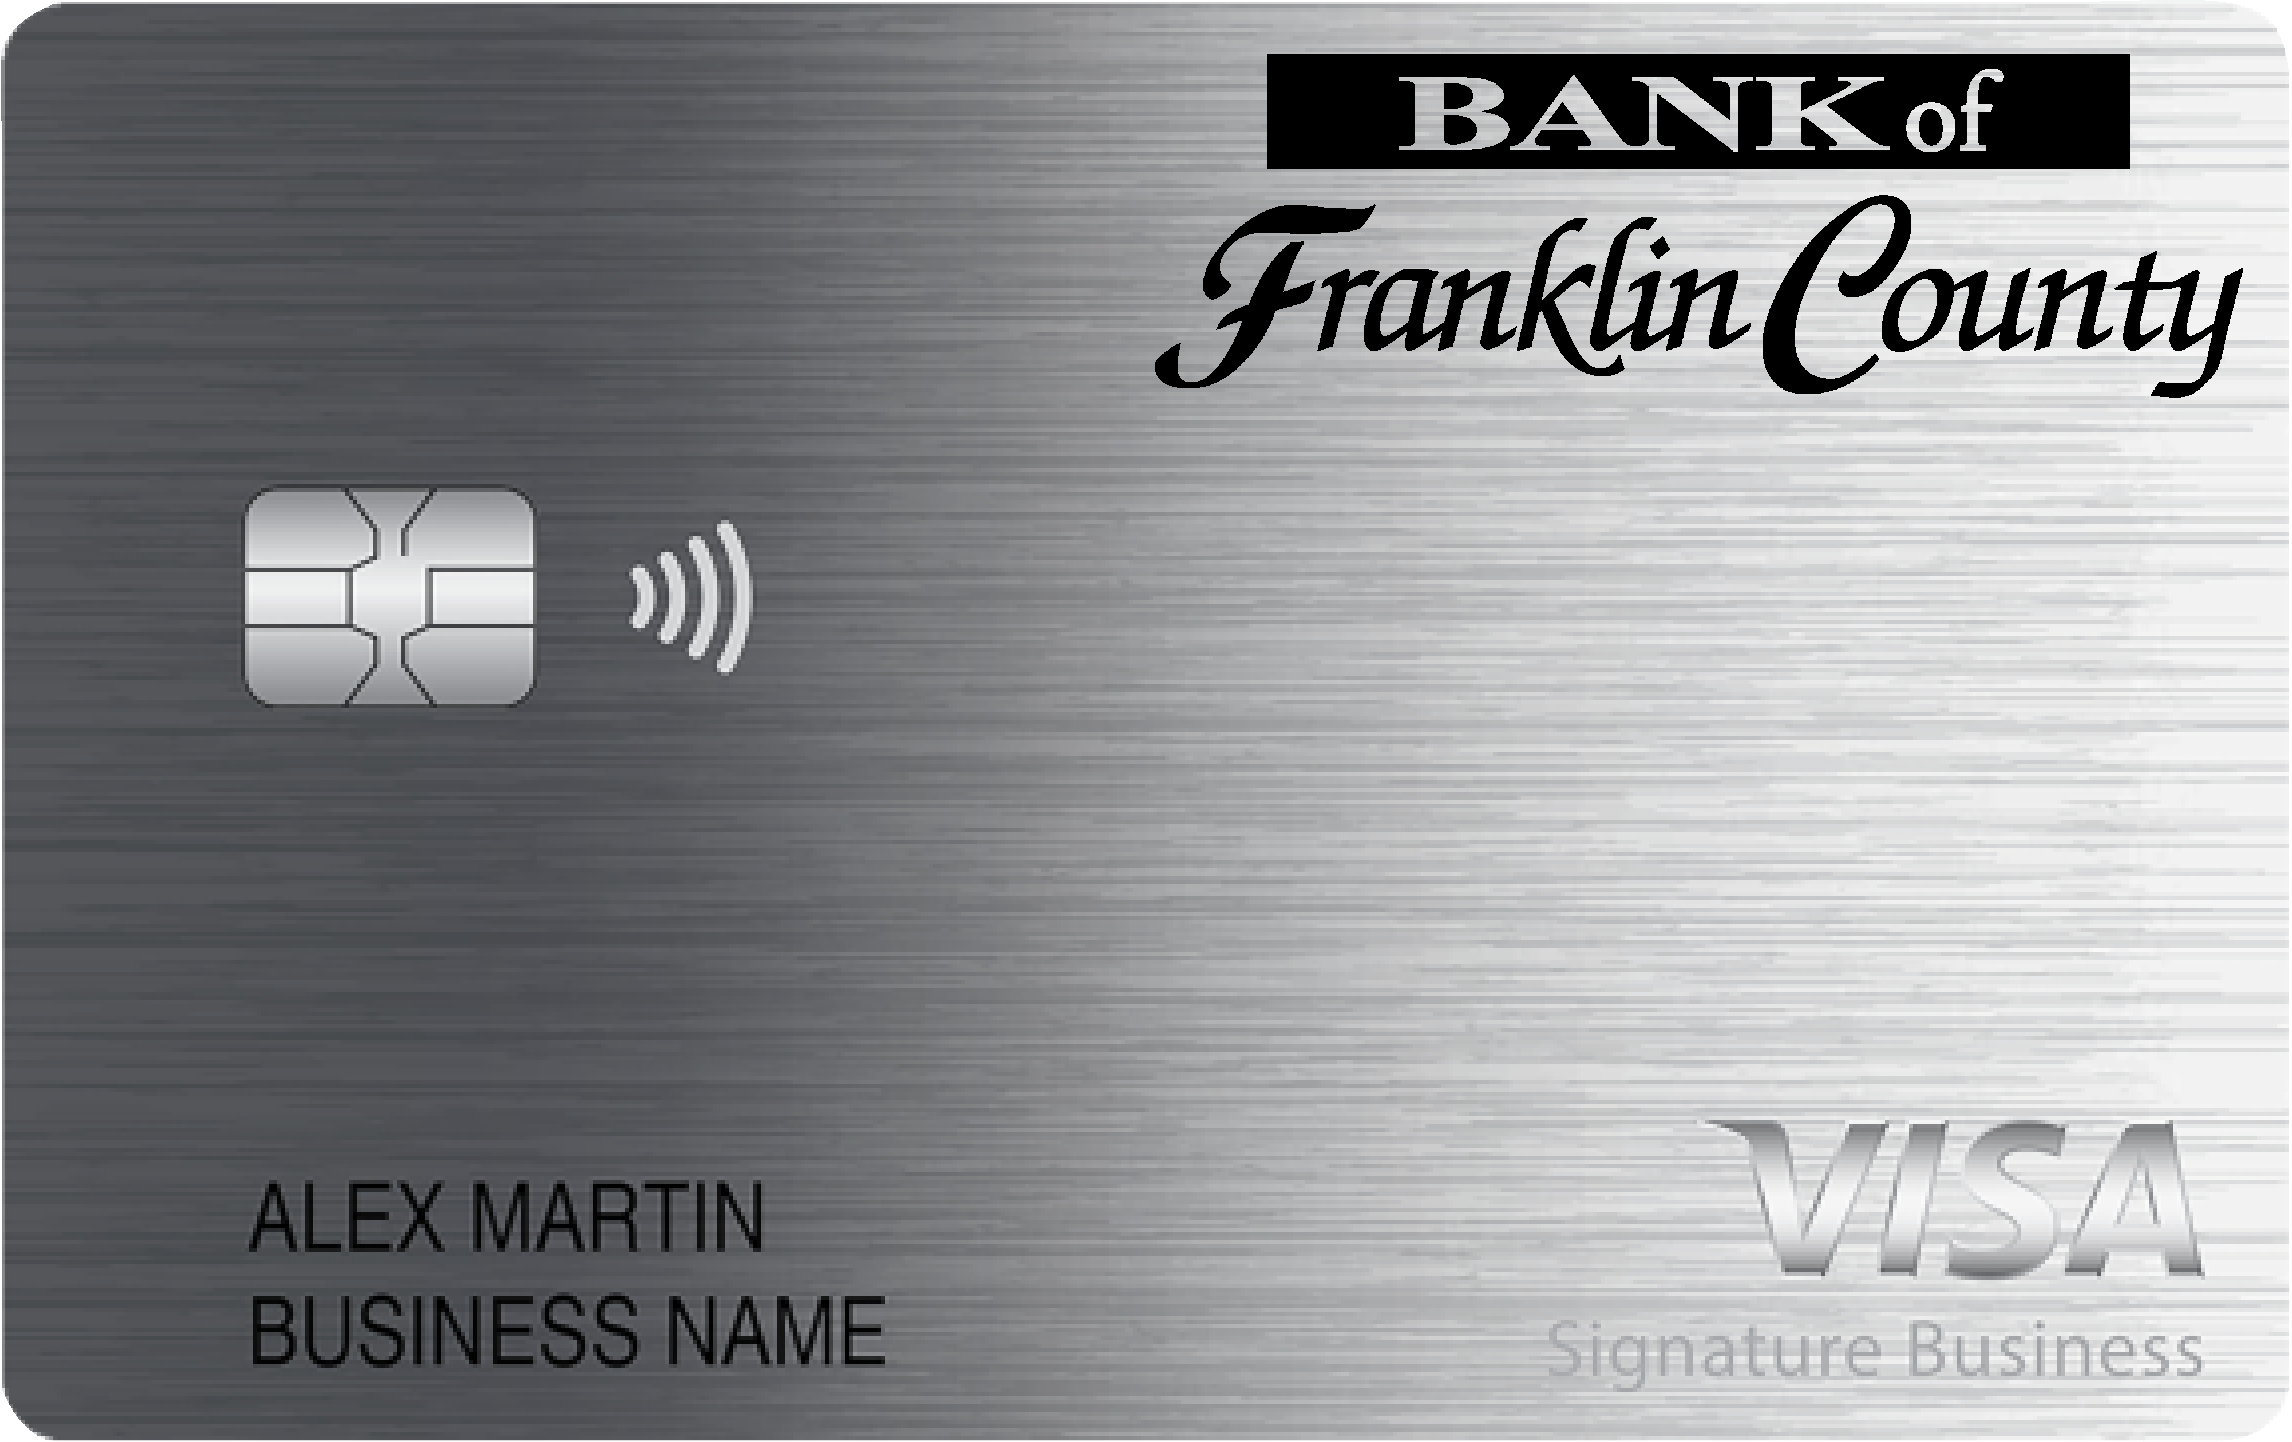 Bank of Franklin County Smart Business Rewards Card